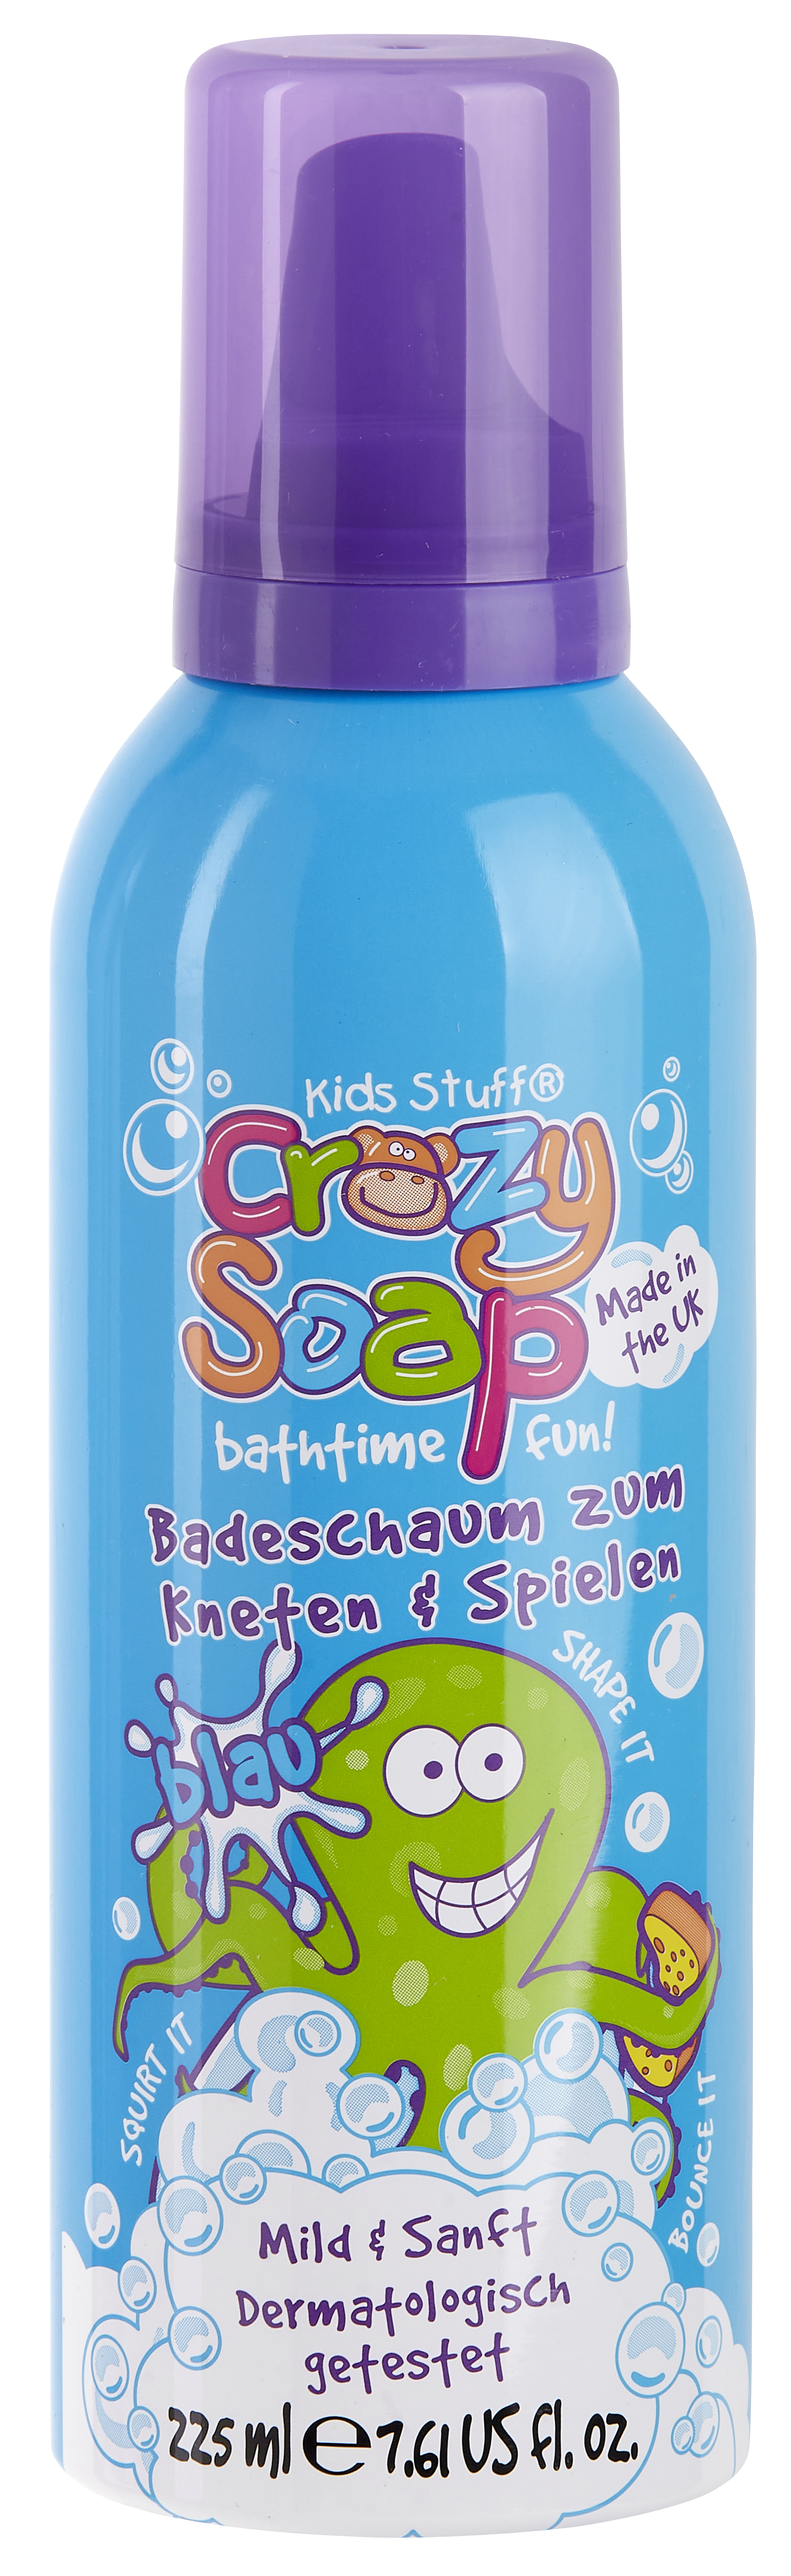 Kids Stuff Crazy Soap Formbarer Kinderbadeschaum blau 225ml